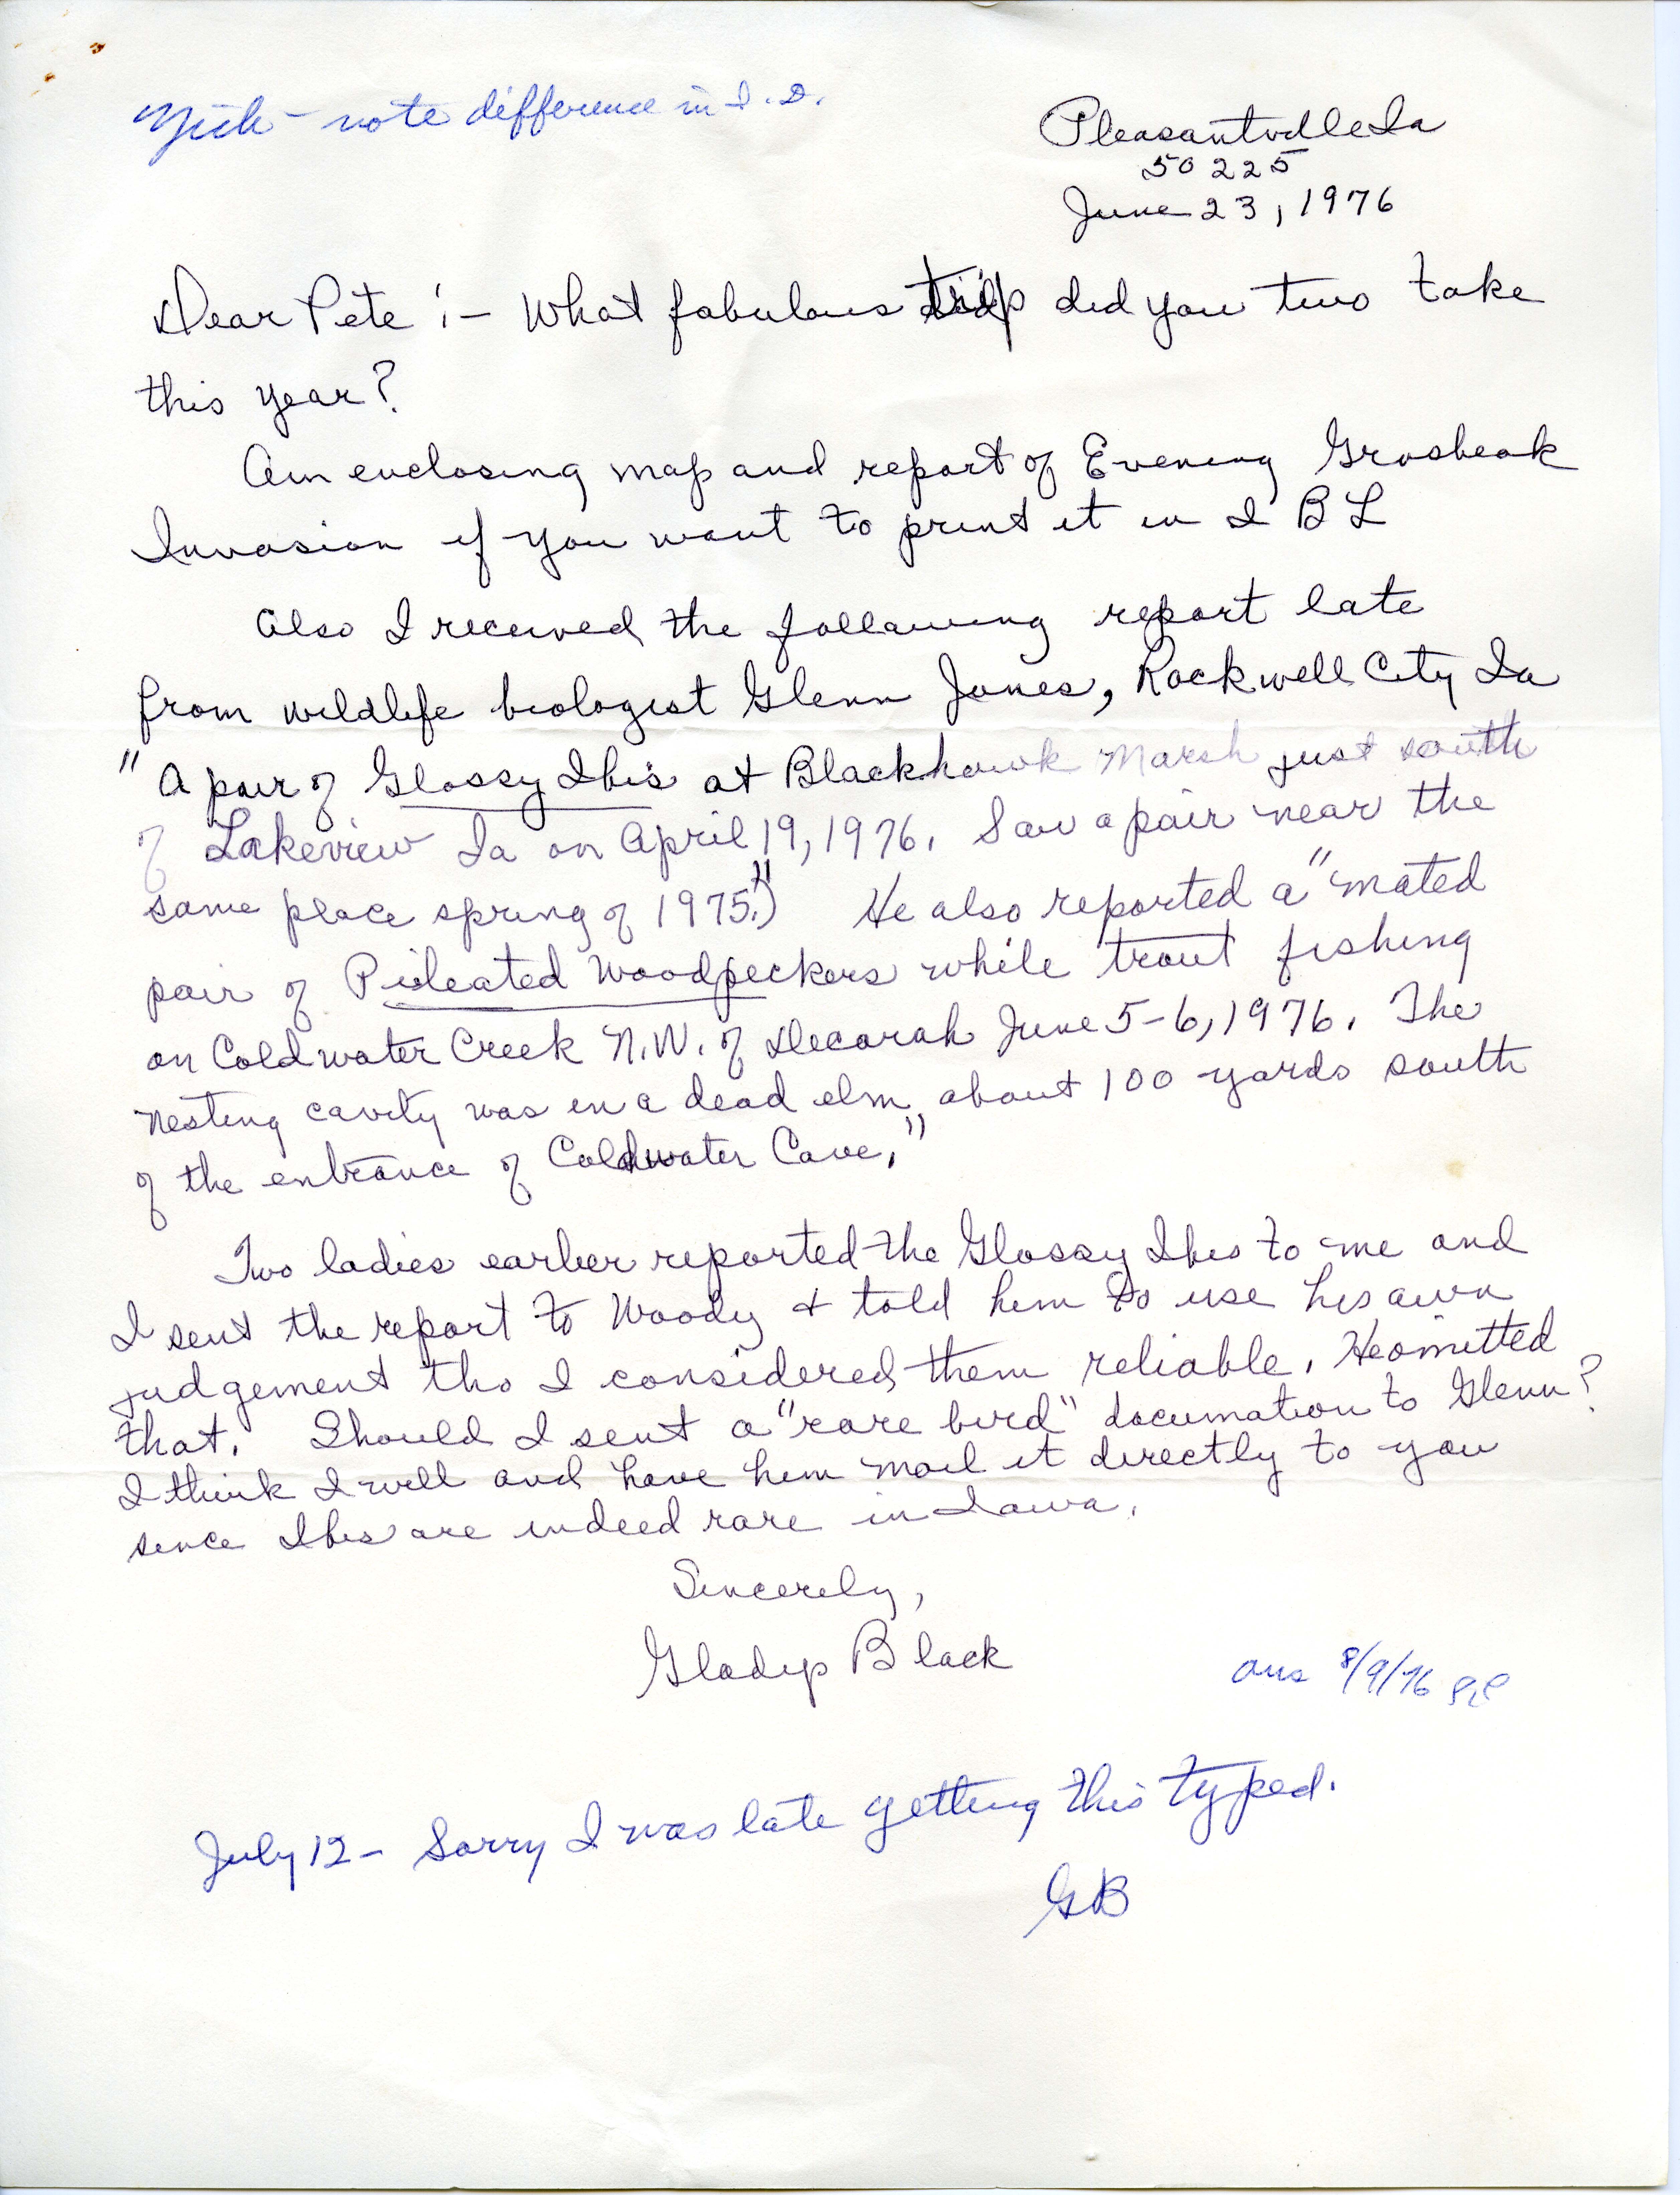 Letter from Gladys Black, June 23, 1976